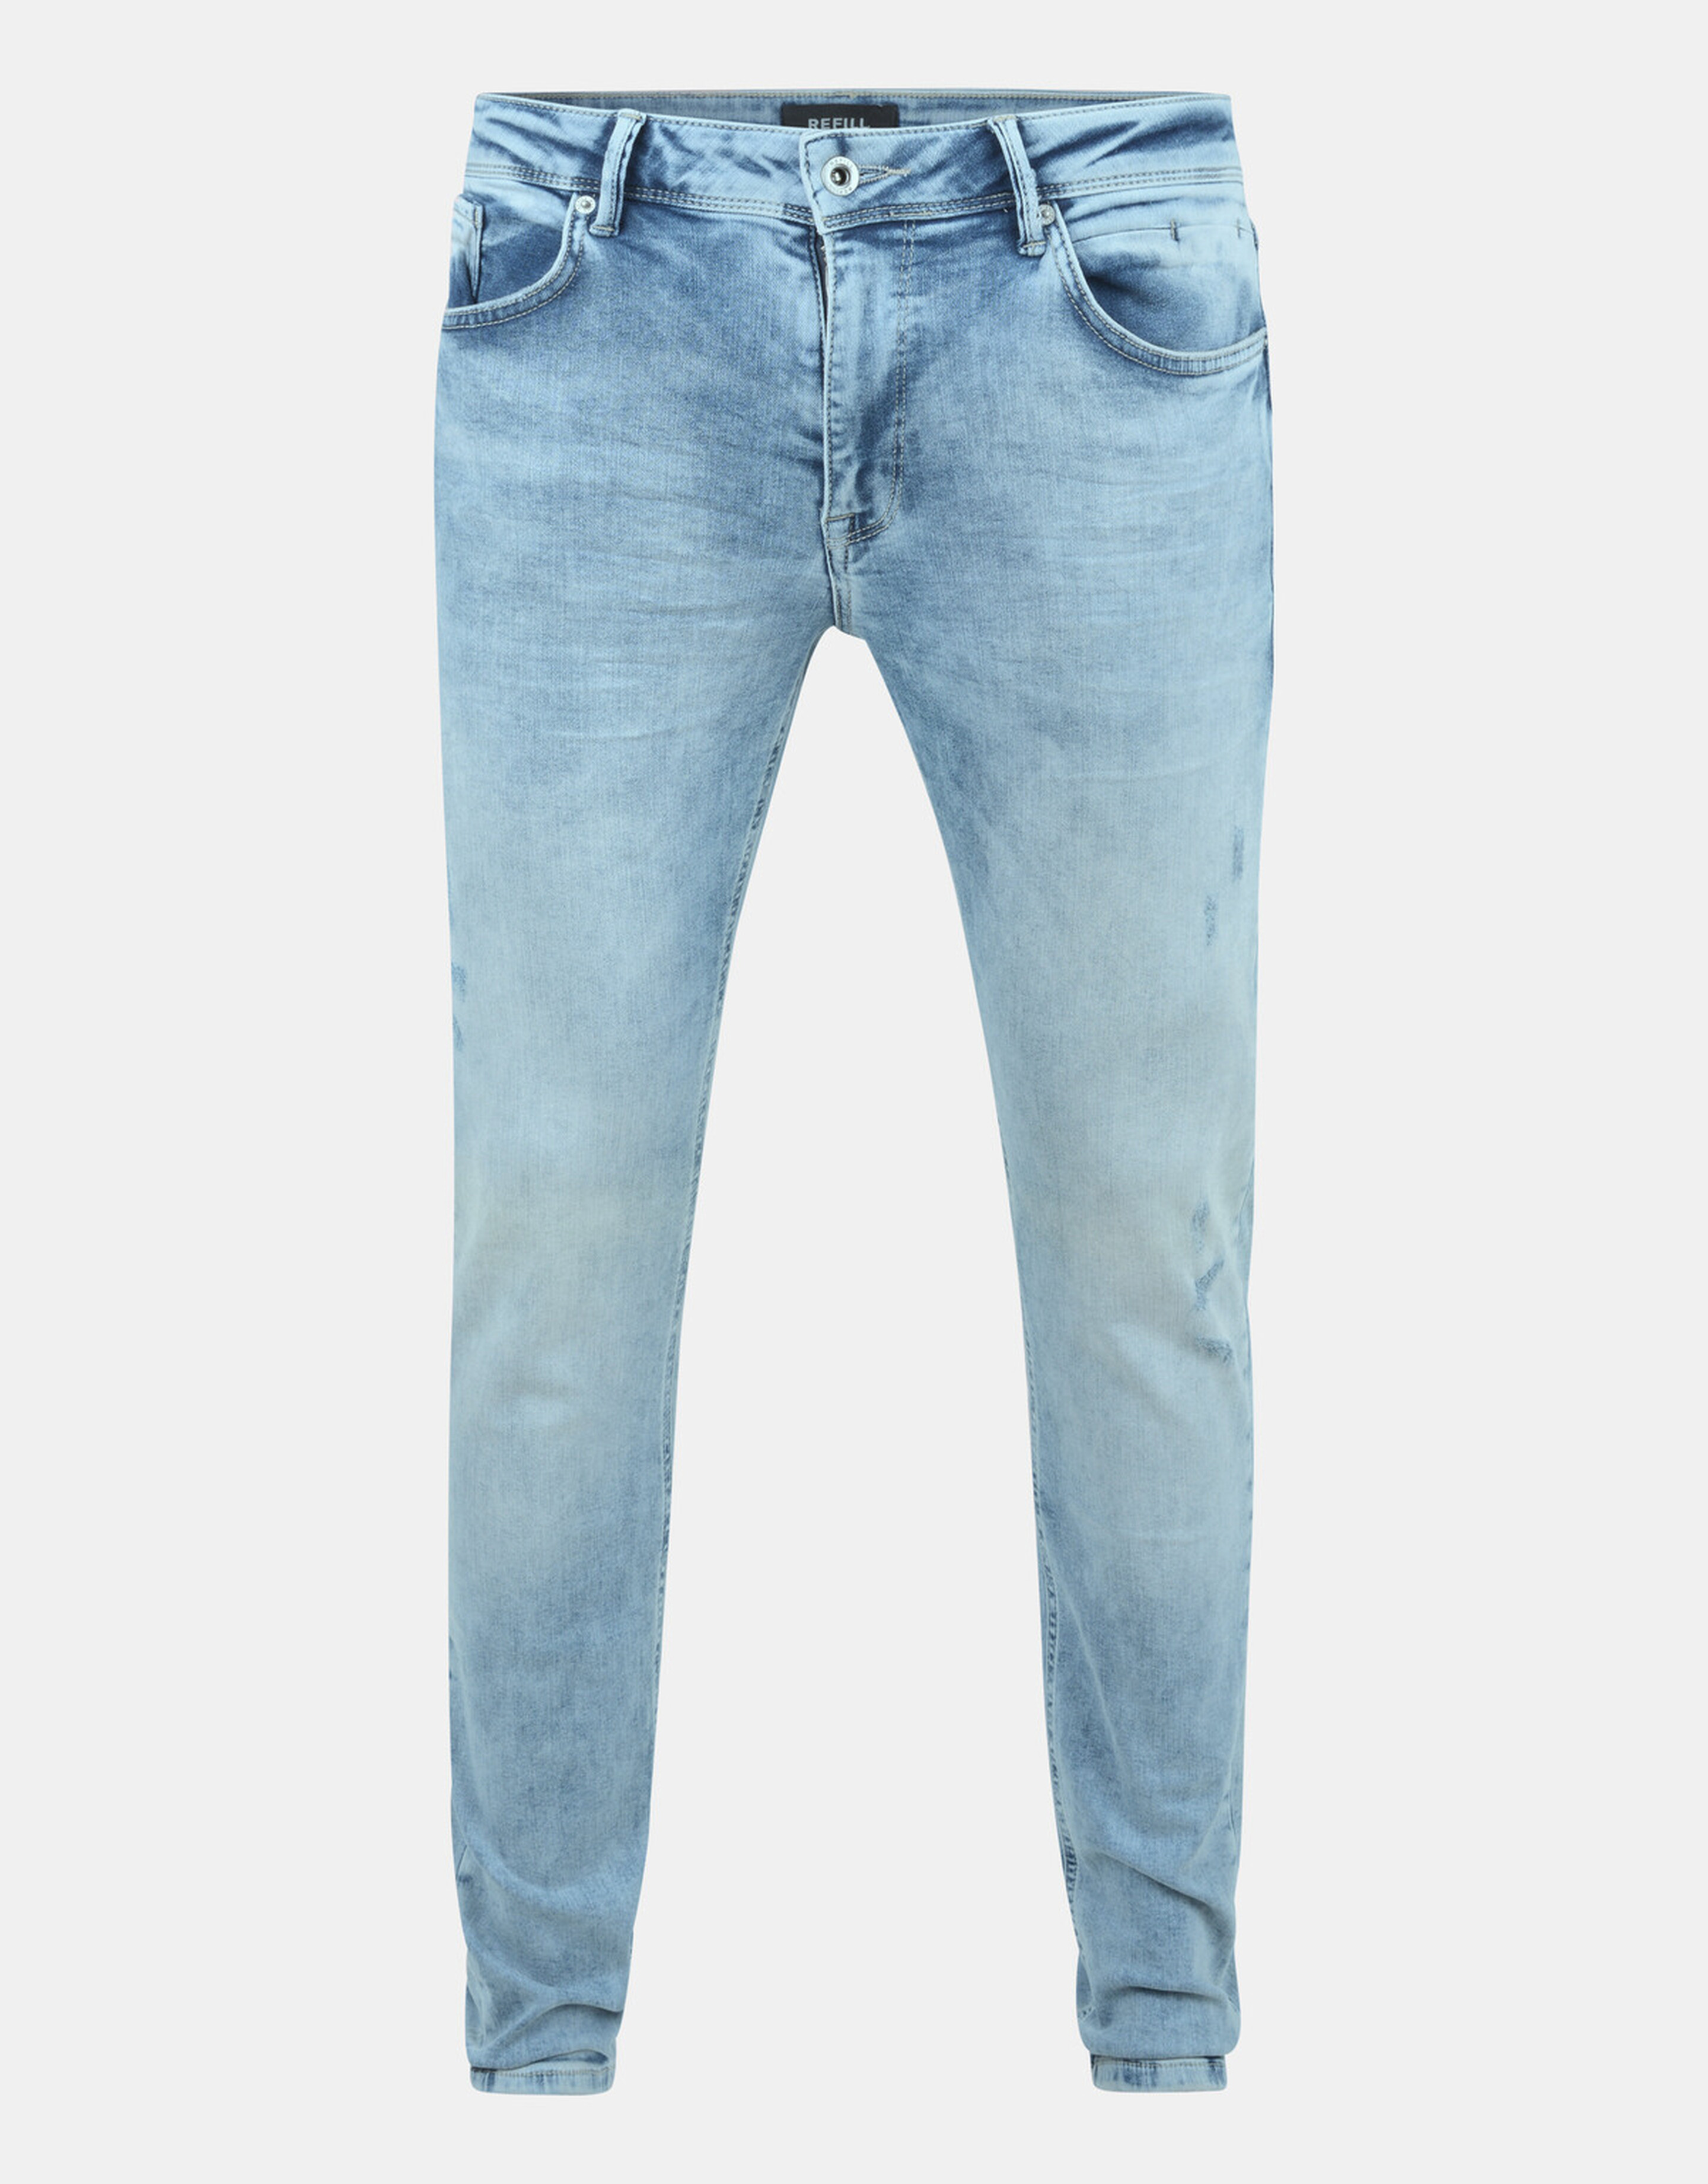 Lucas Slim Ametist Jeans L34 Refill